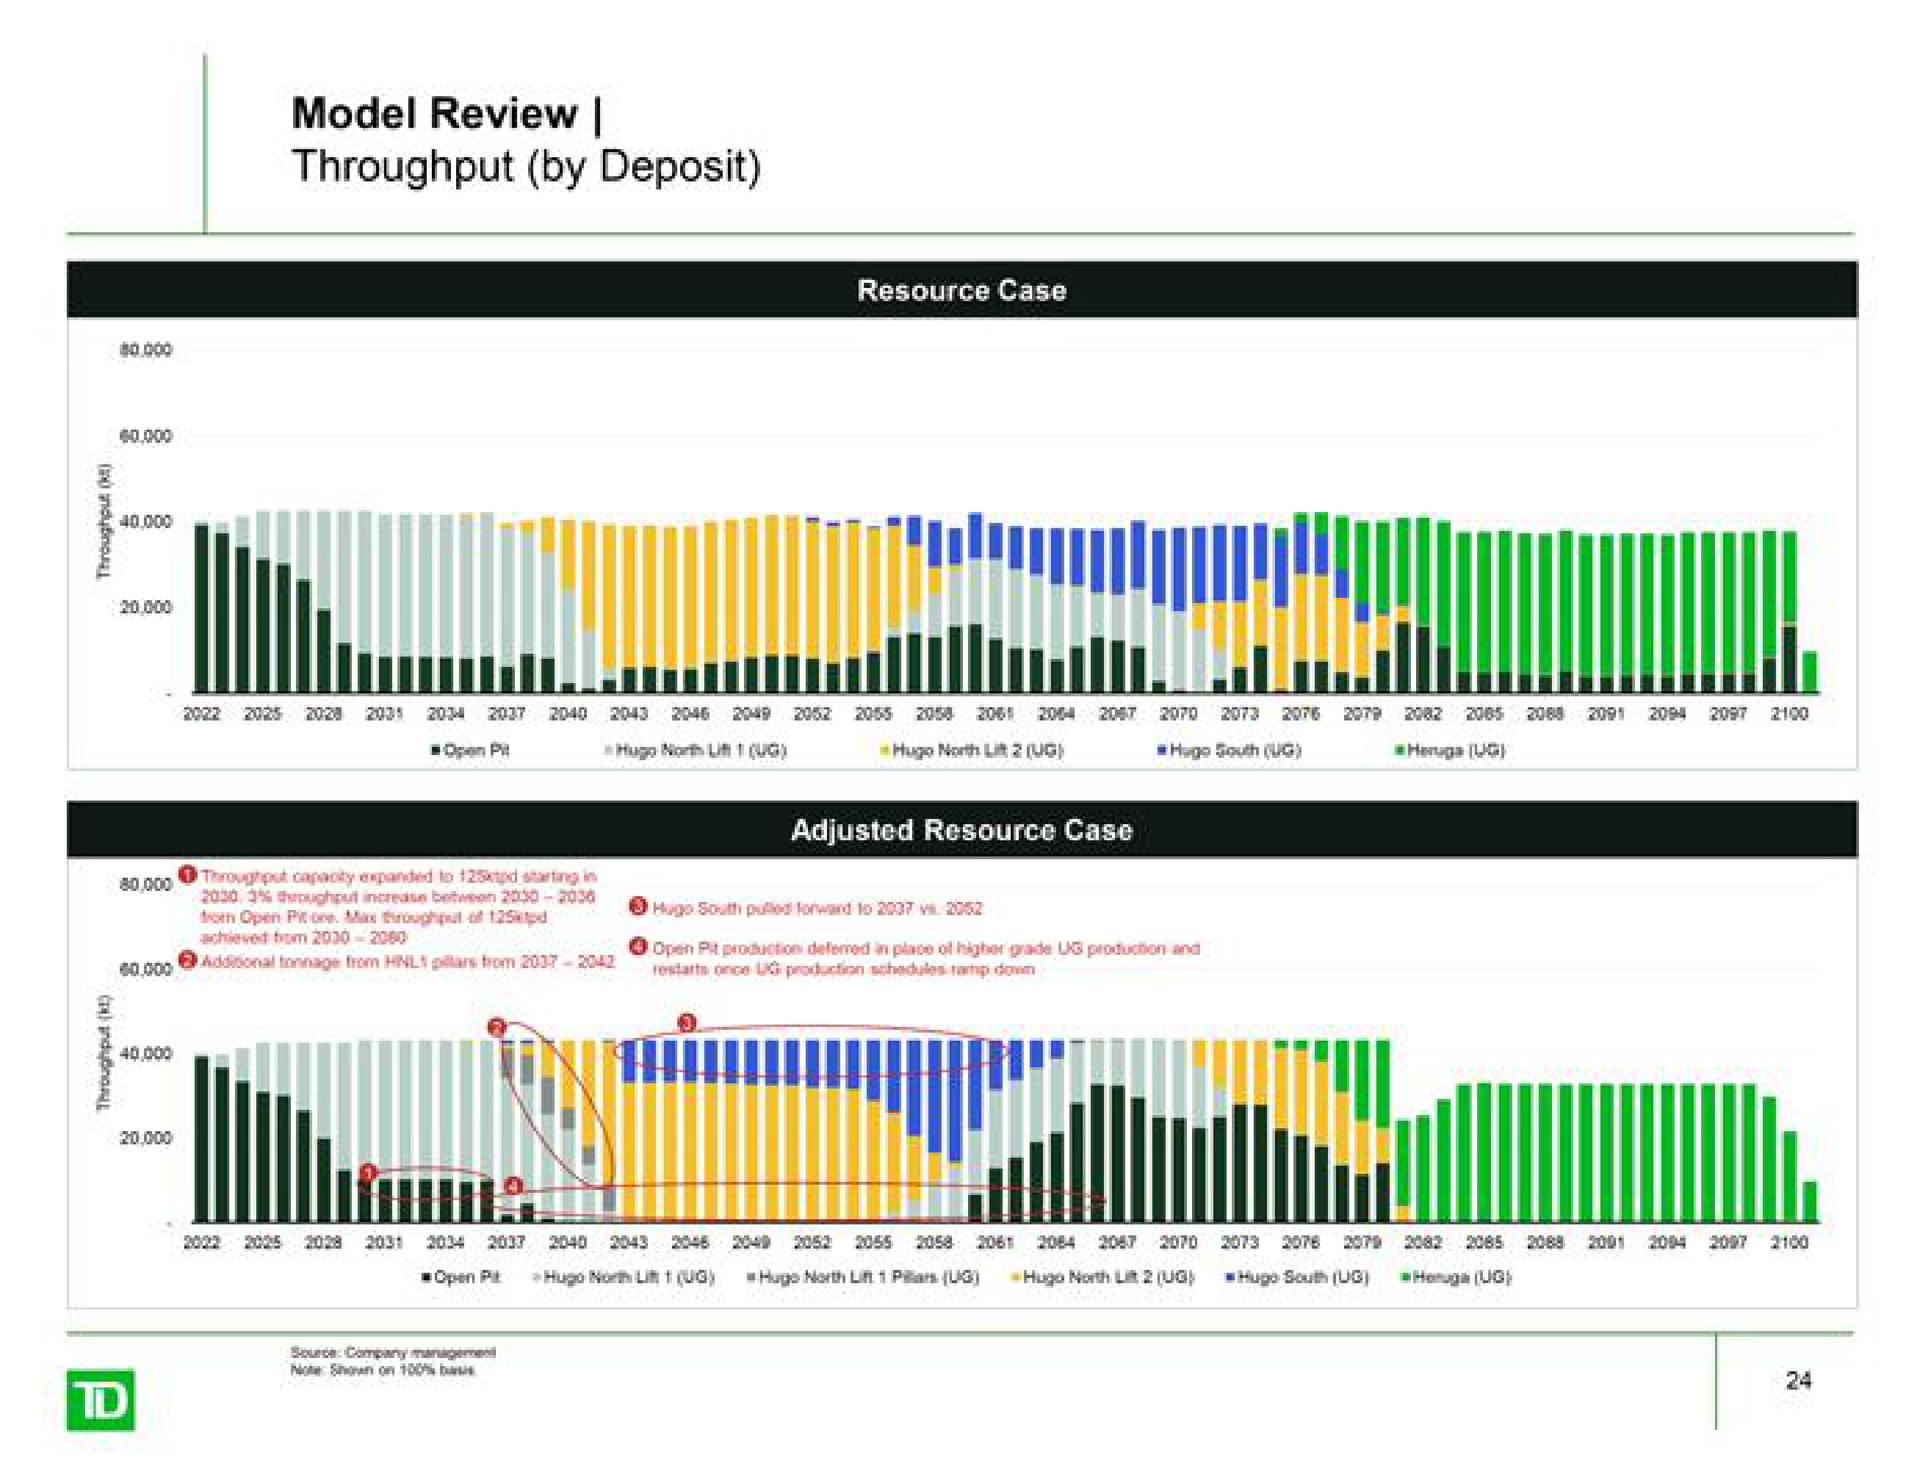 model review throughput by deposit | TD Securities